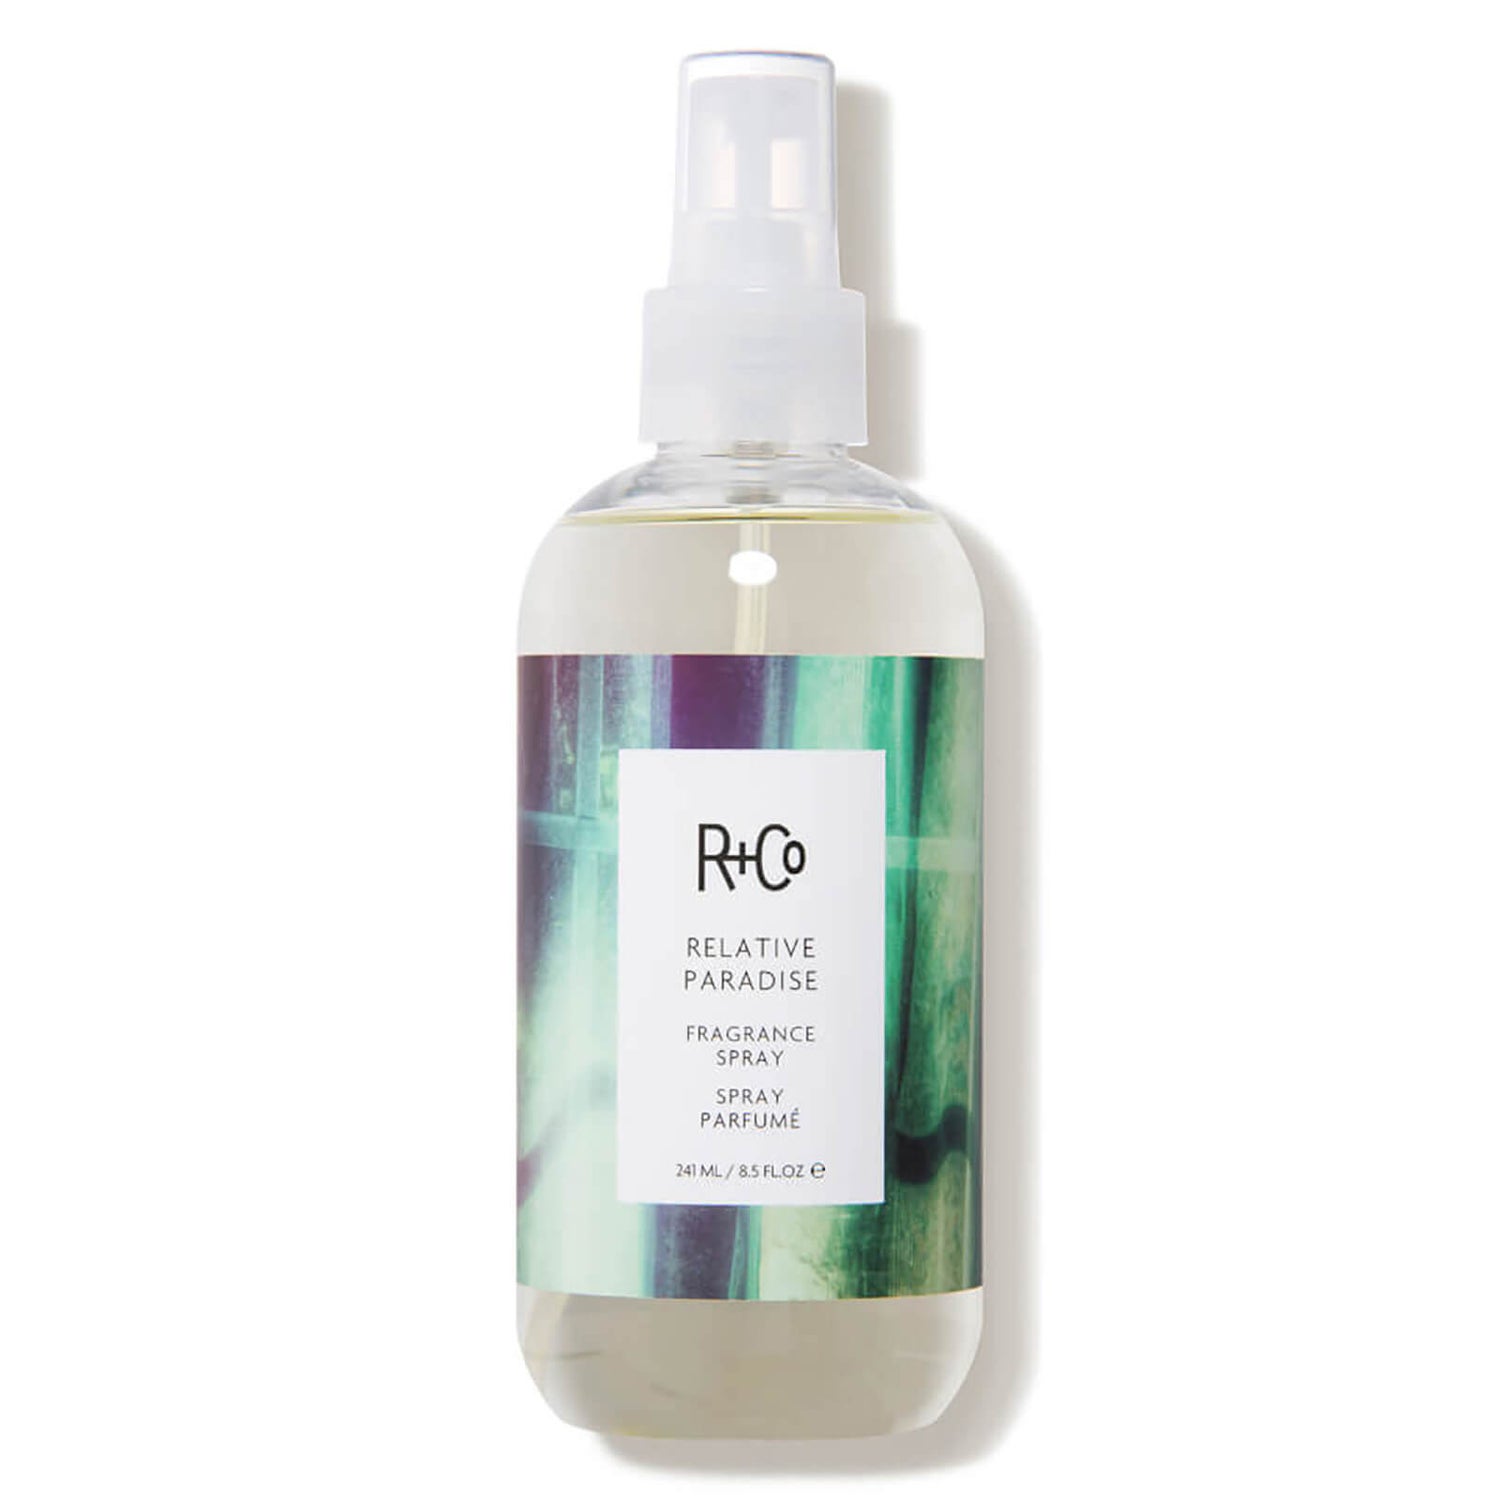 R+Co RELATIVE PARADISE Fragrance Spray (8.5 fl. oz.) - Dermstore